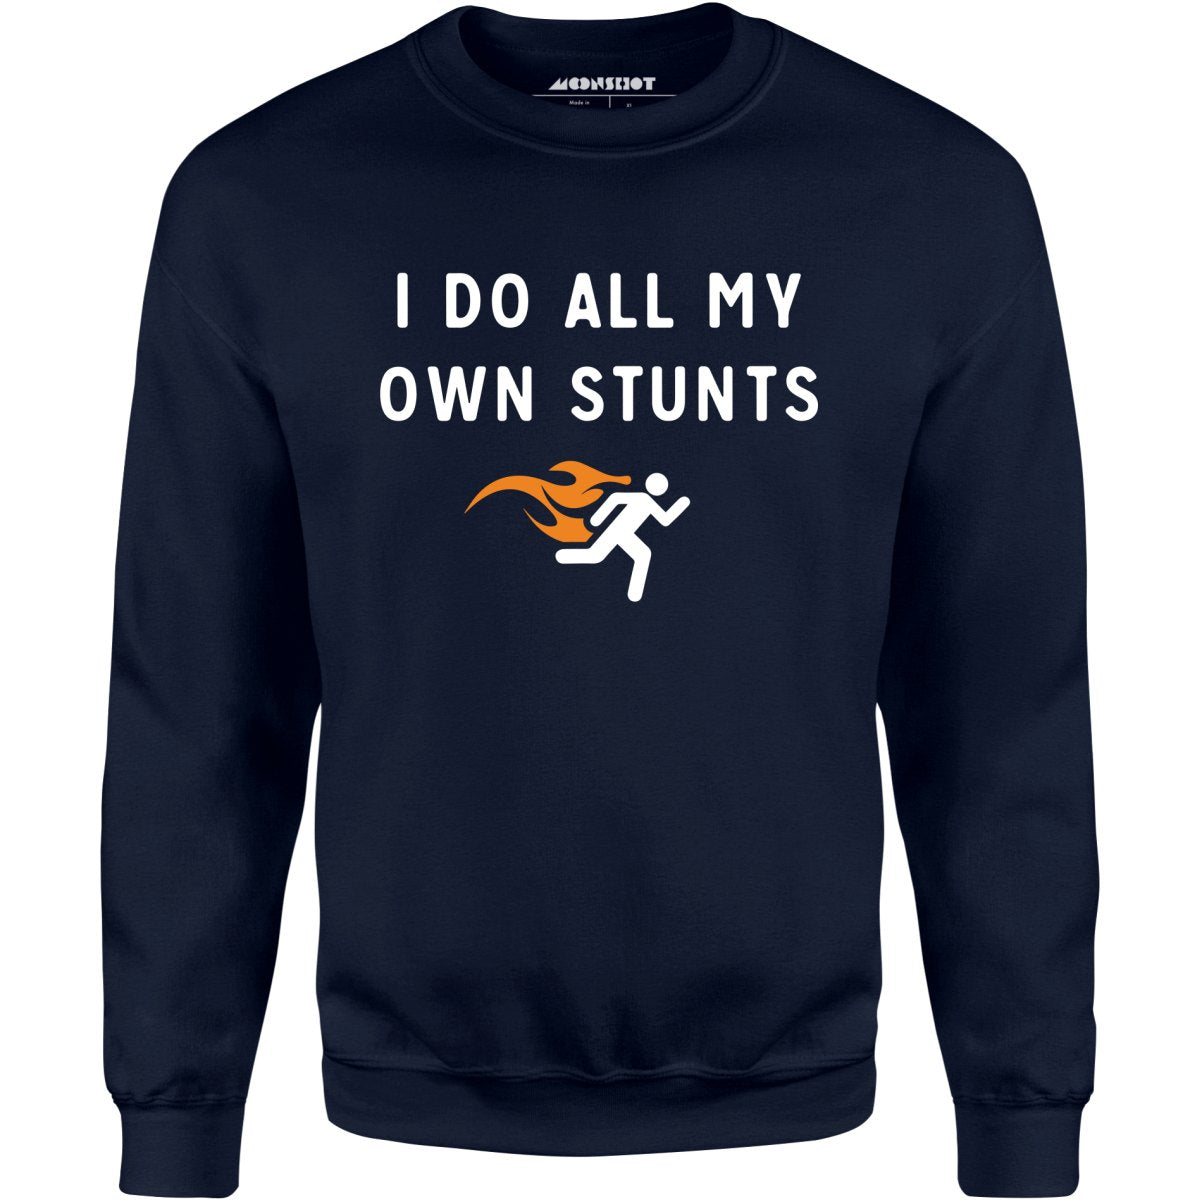 I Do All My Own Stunts - Unisex Sweatshirt